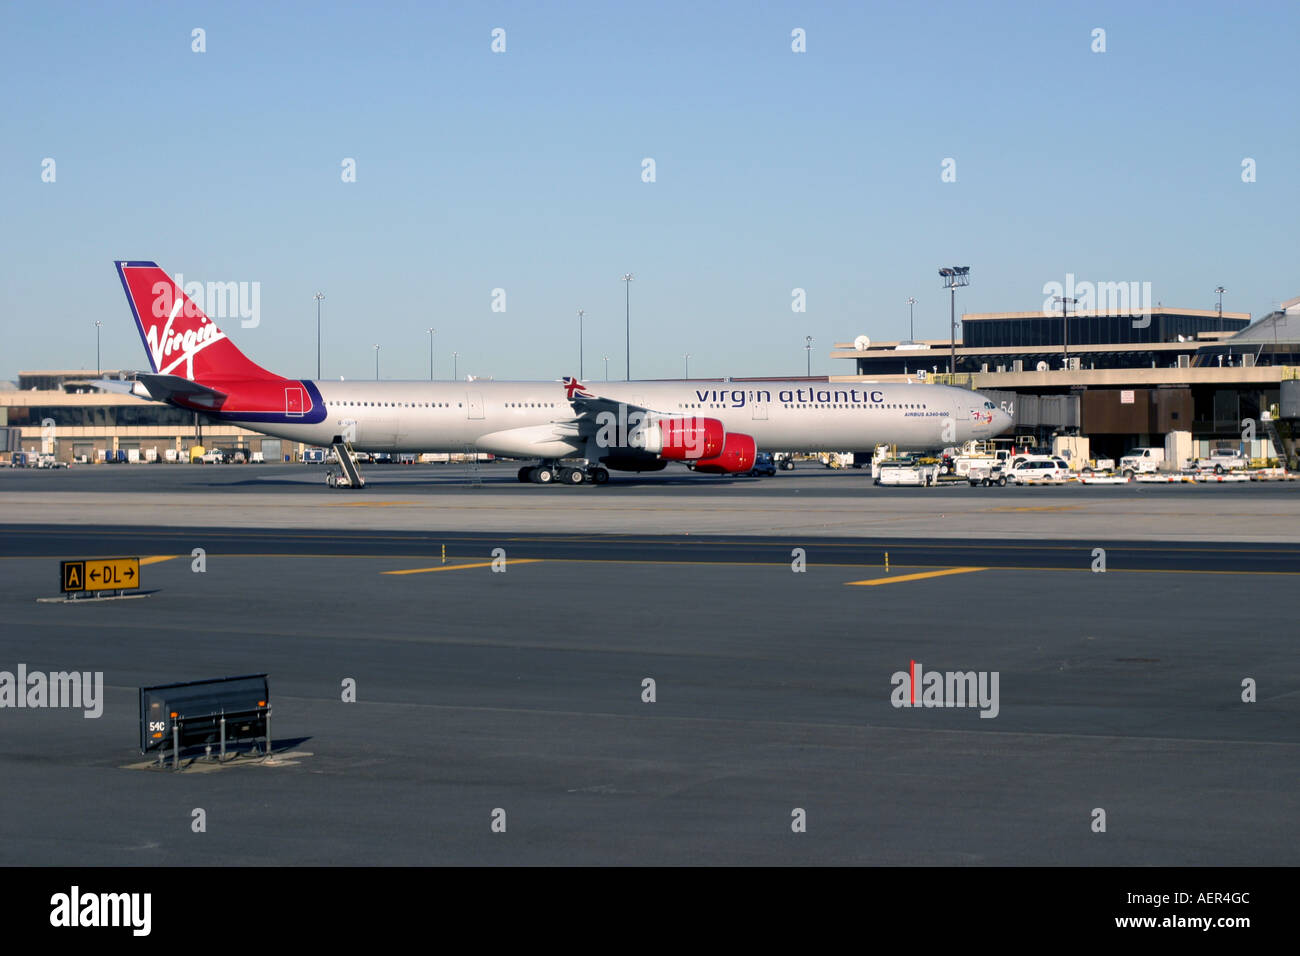 Virgin Airlines Aircraft at on the tarmac at Newark Liberty International Airport, New Jersey, U.S.A. Stock Photo